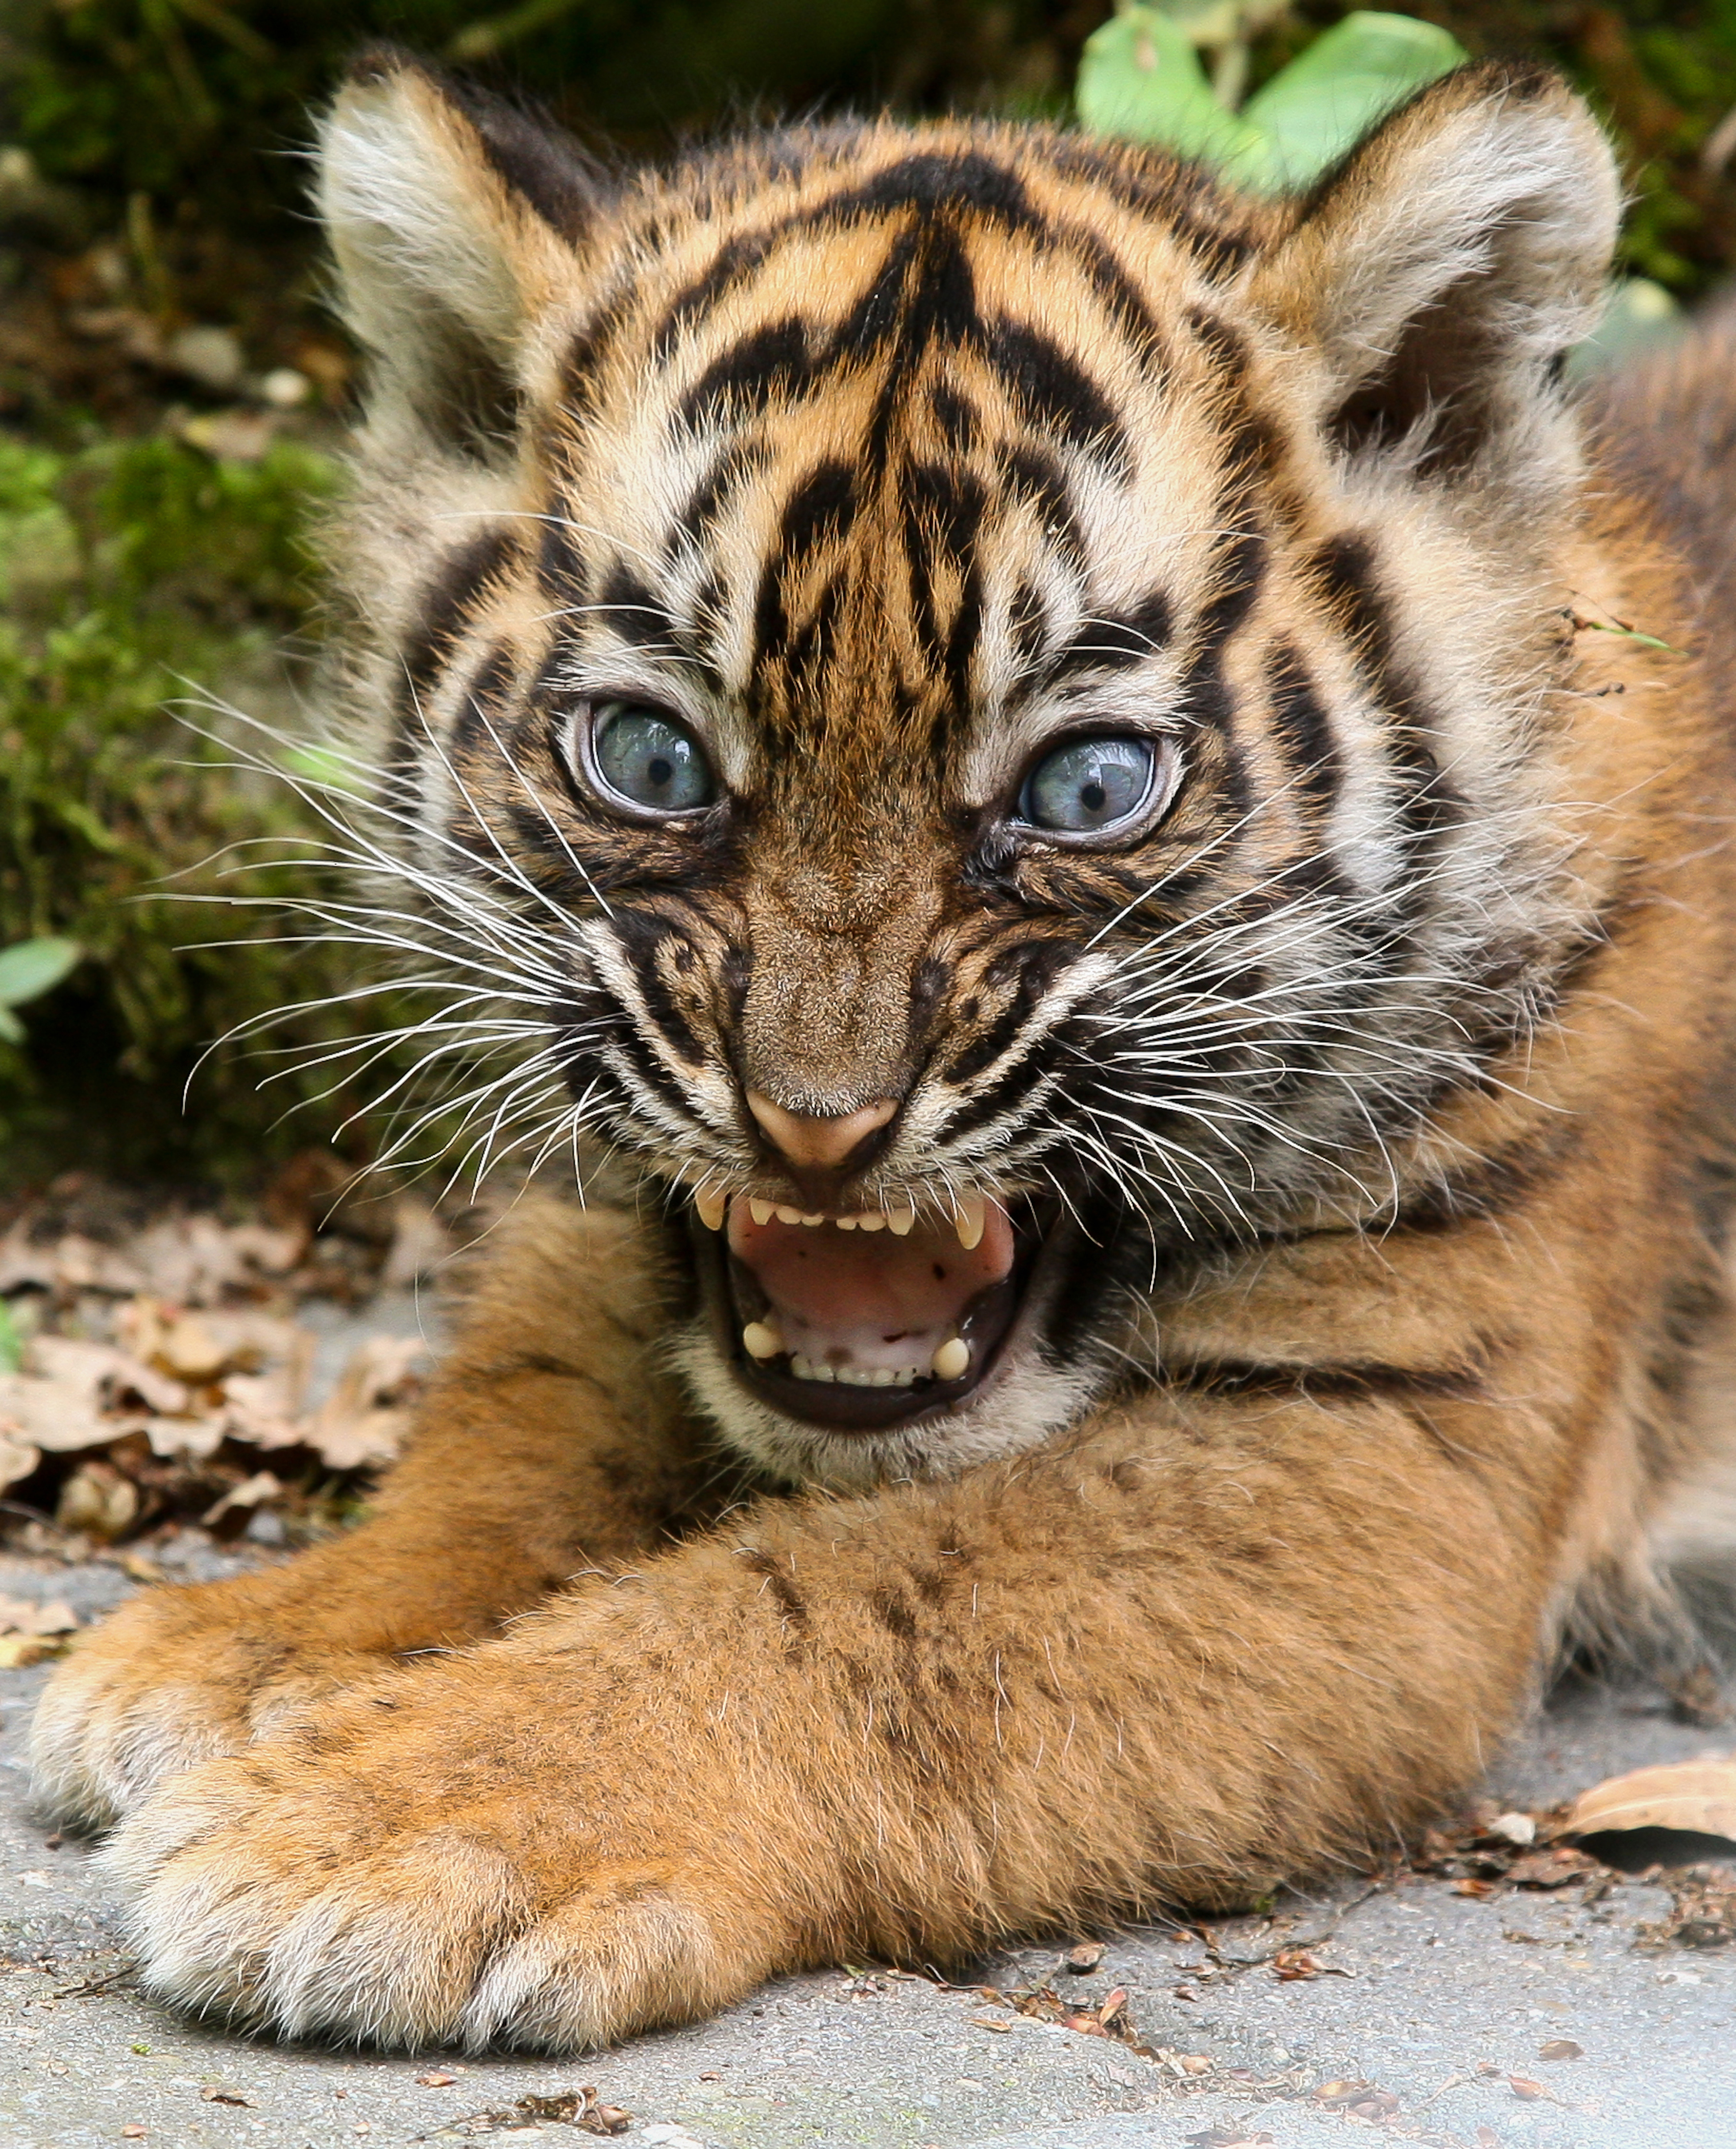 Young tiger cub at Burgers' Zoo Arnhem